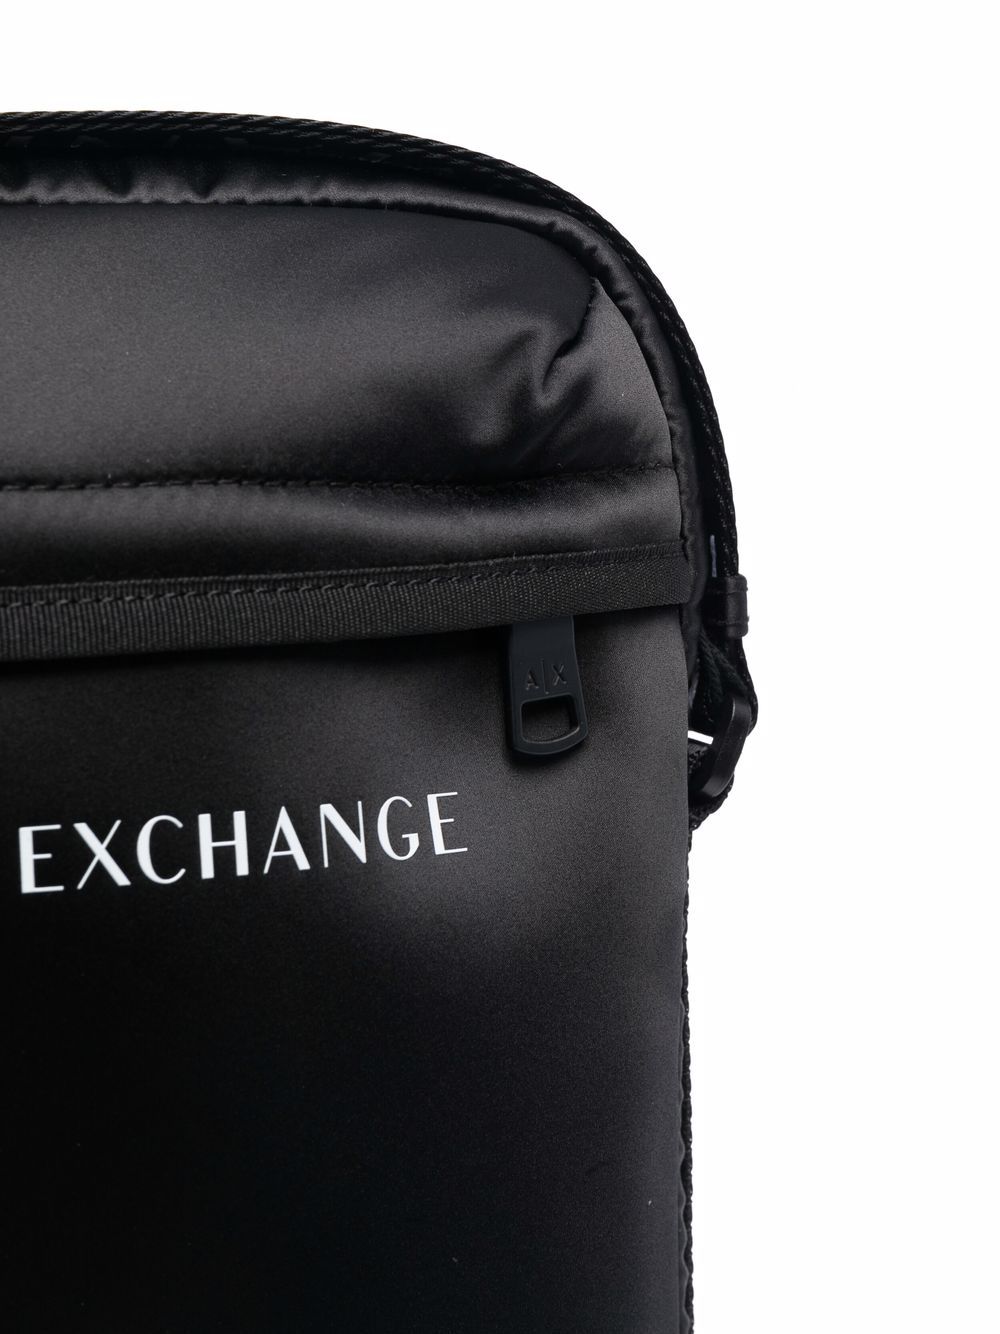 фото Armani exchange сумка-мессенджер с логотипом